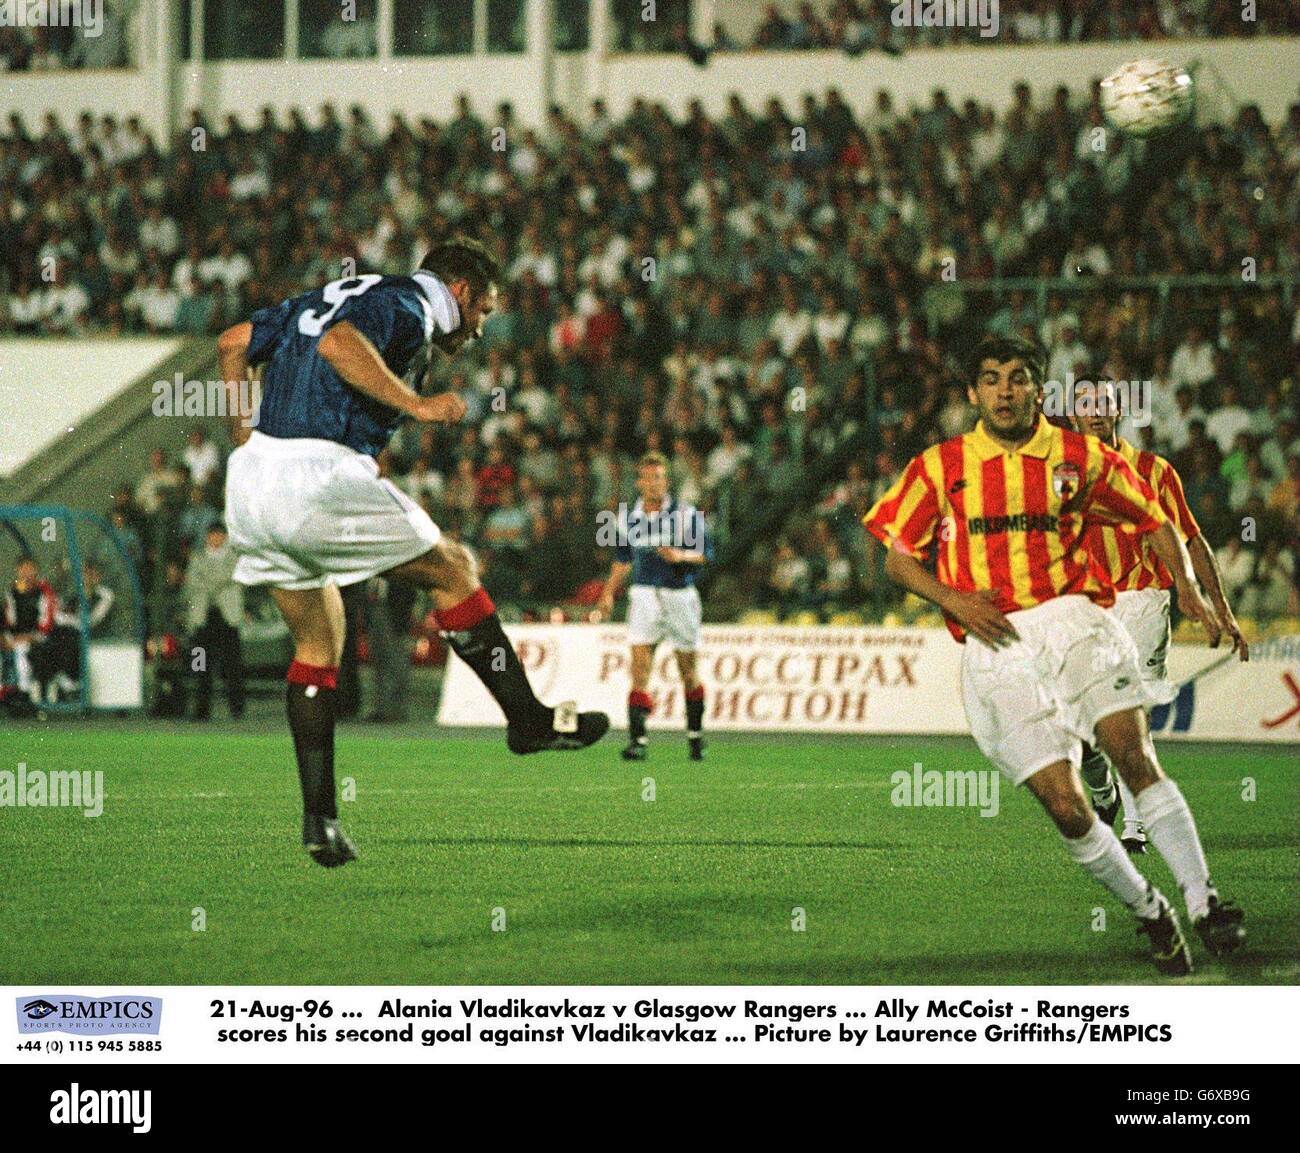 21-Aug-96, Alania Vladikavkaz v Glasgow Rangers, Ally McCoist - Rangers scores his second goal against Vladikavkaz, Picture by Laurence Griffiths/EMPICS Stock Photo